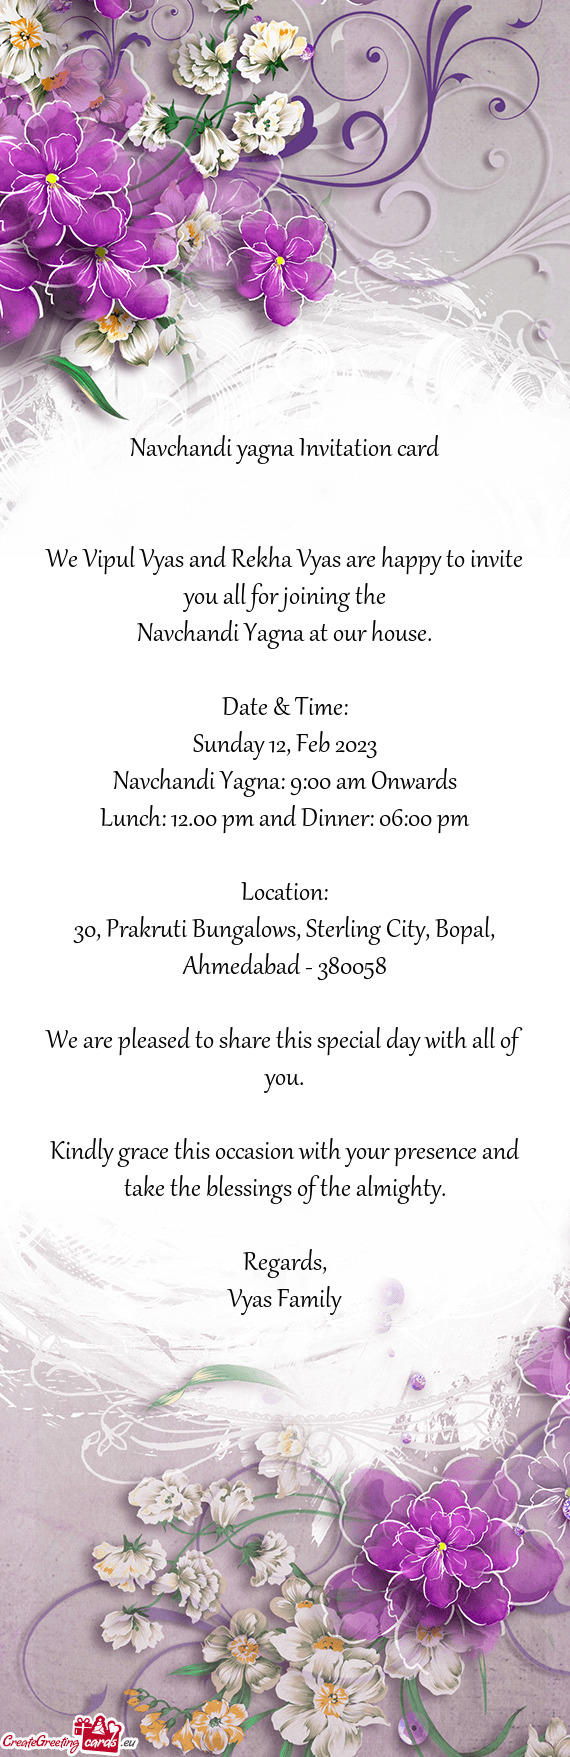 Navchandi yagna Invitation card